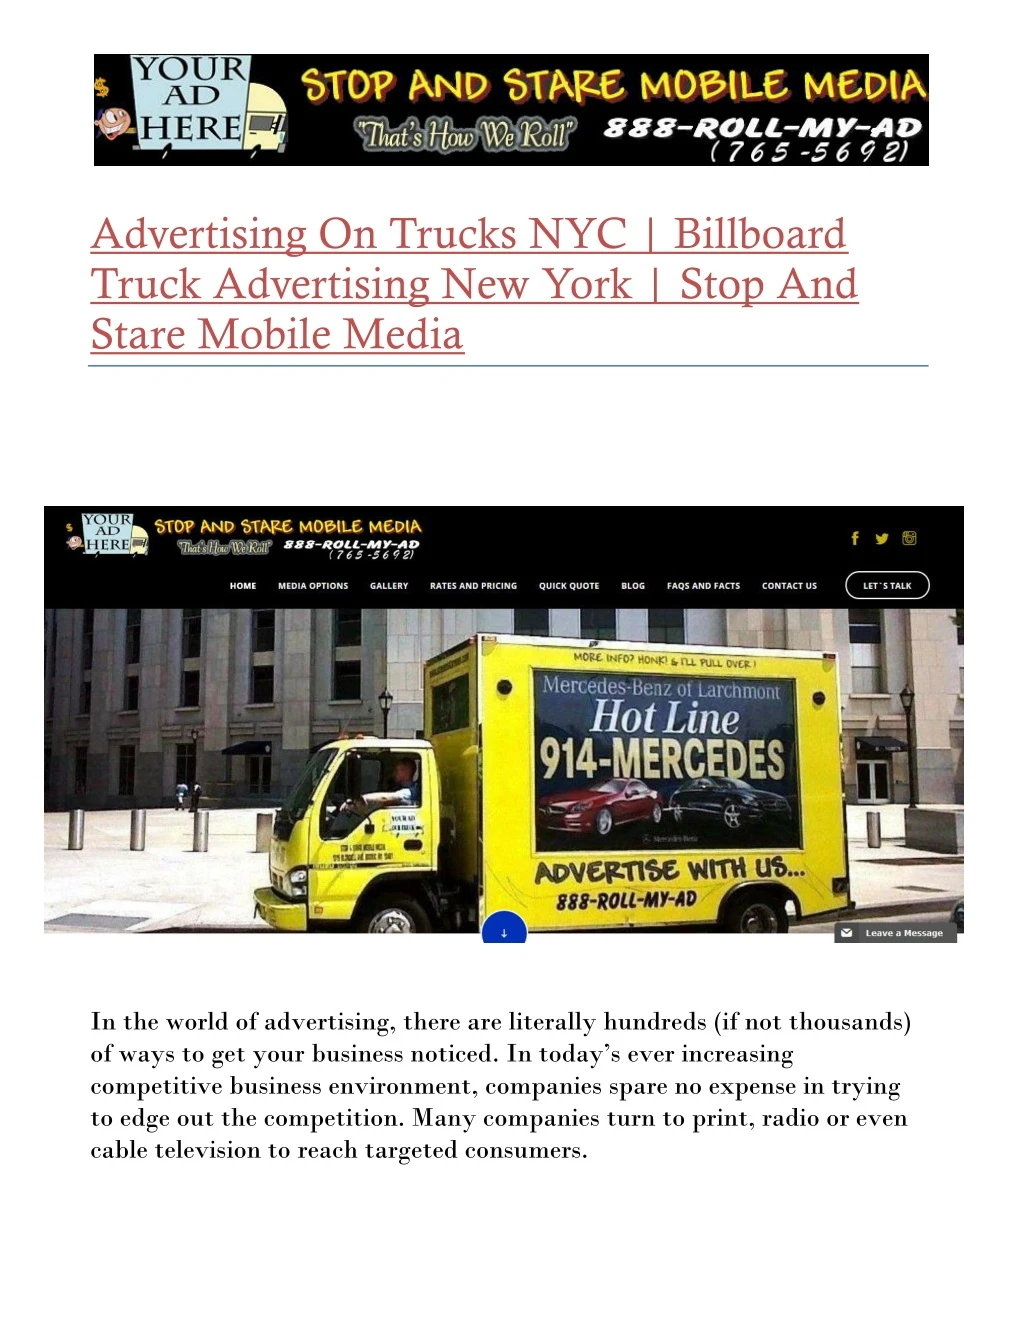 advertising on trucks nyc billboard truck